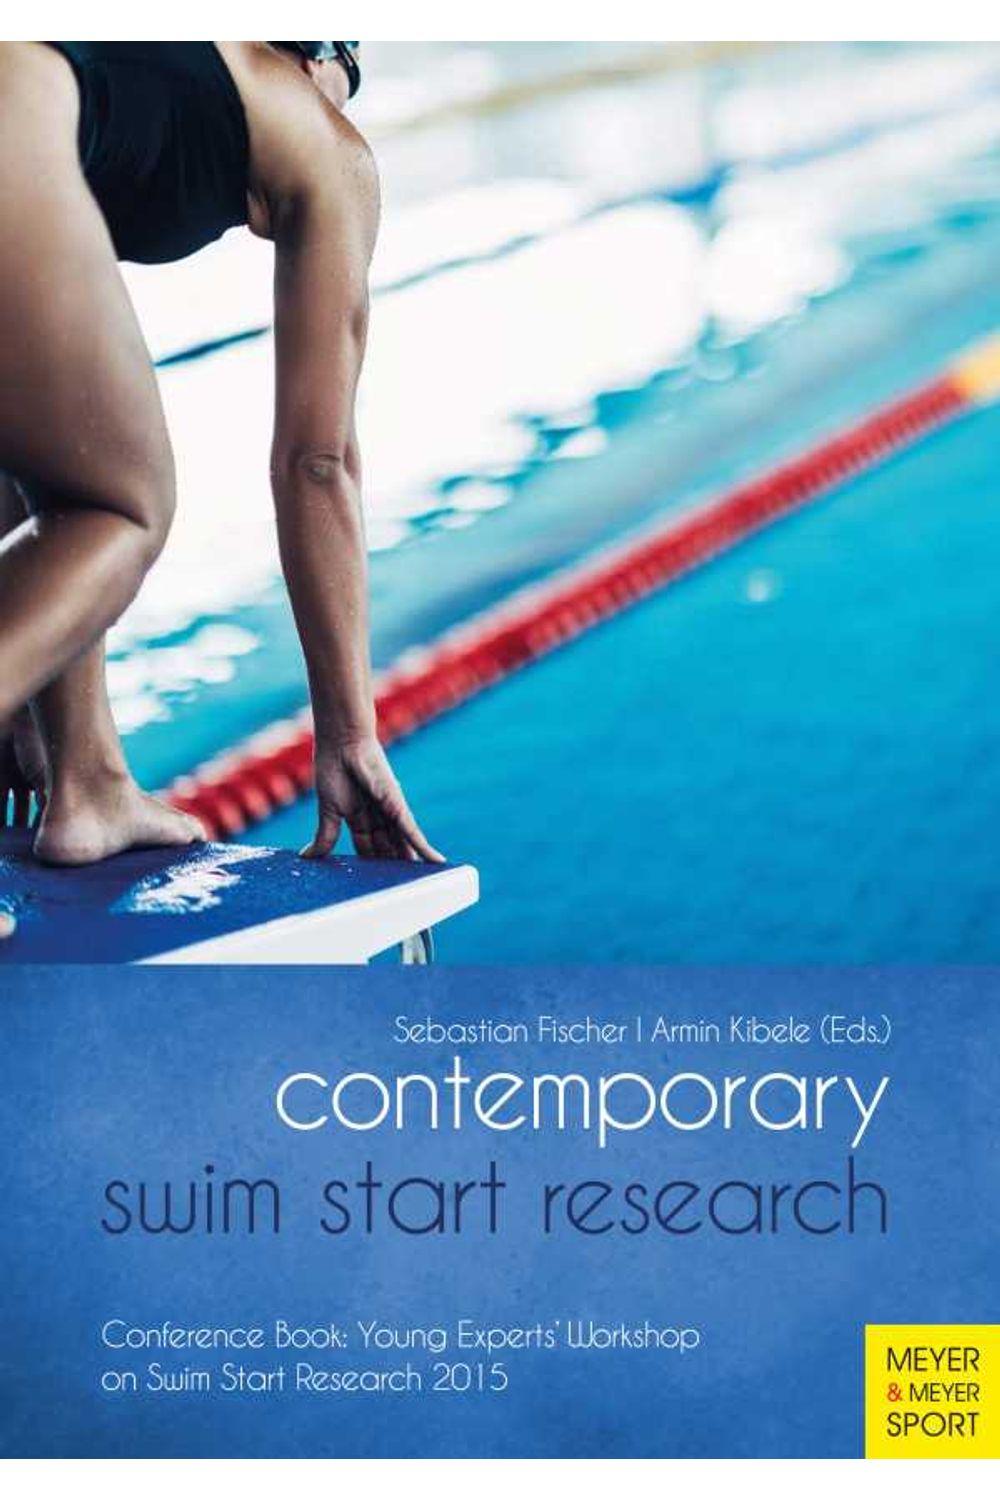 bw-contemporary-swim-start-research-meyer-meyer-sport-9781782557838